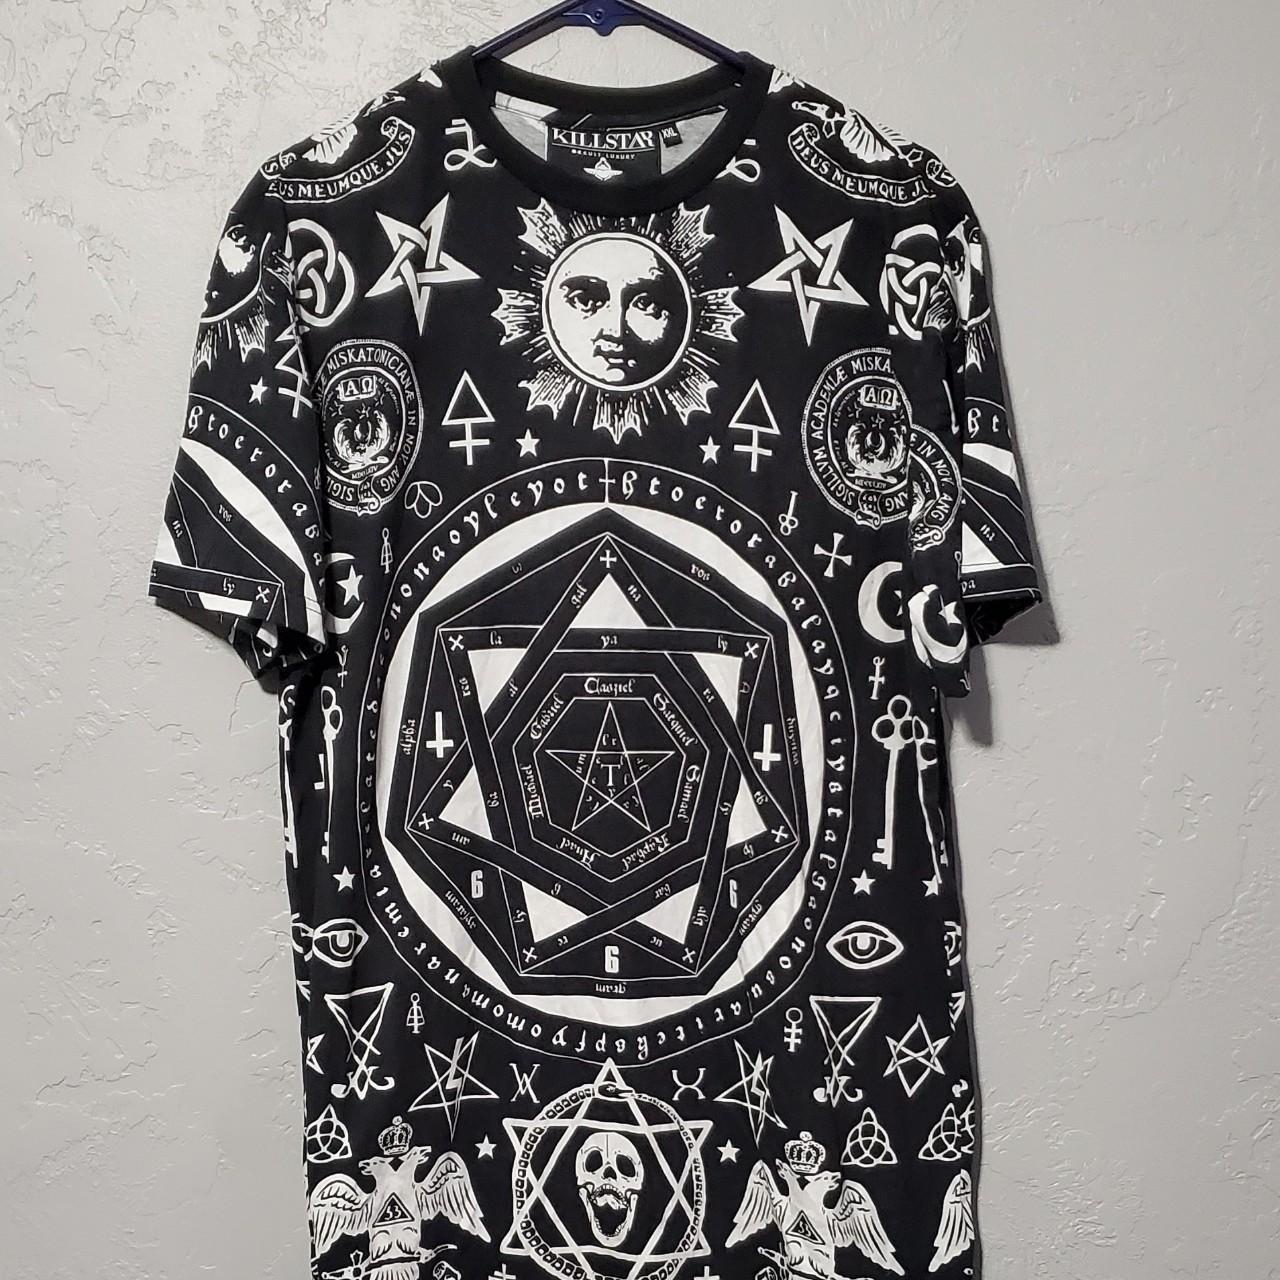 Killstar Occult allover print shirt Never worn or... - Depop